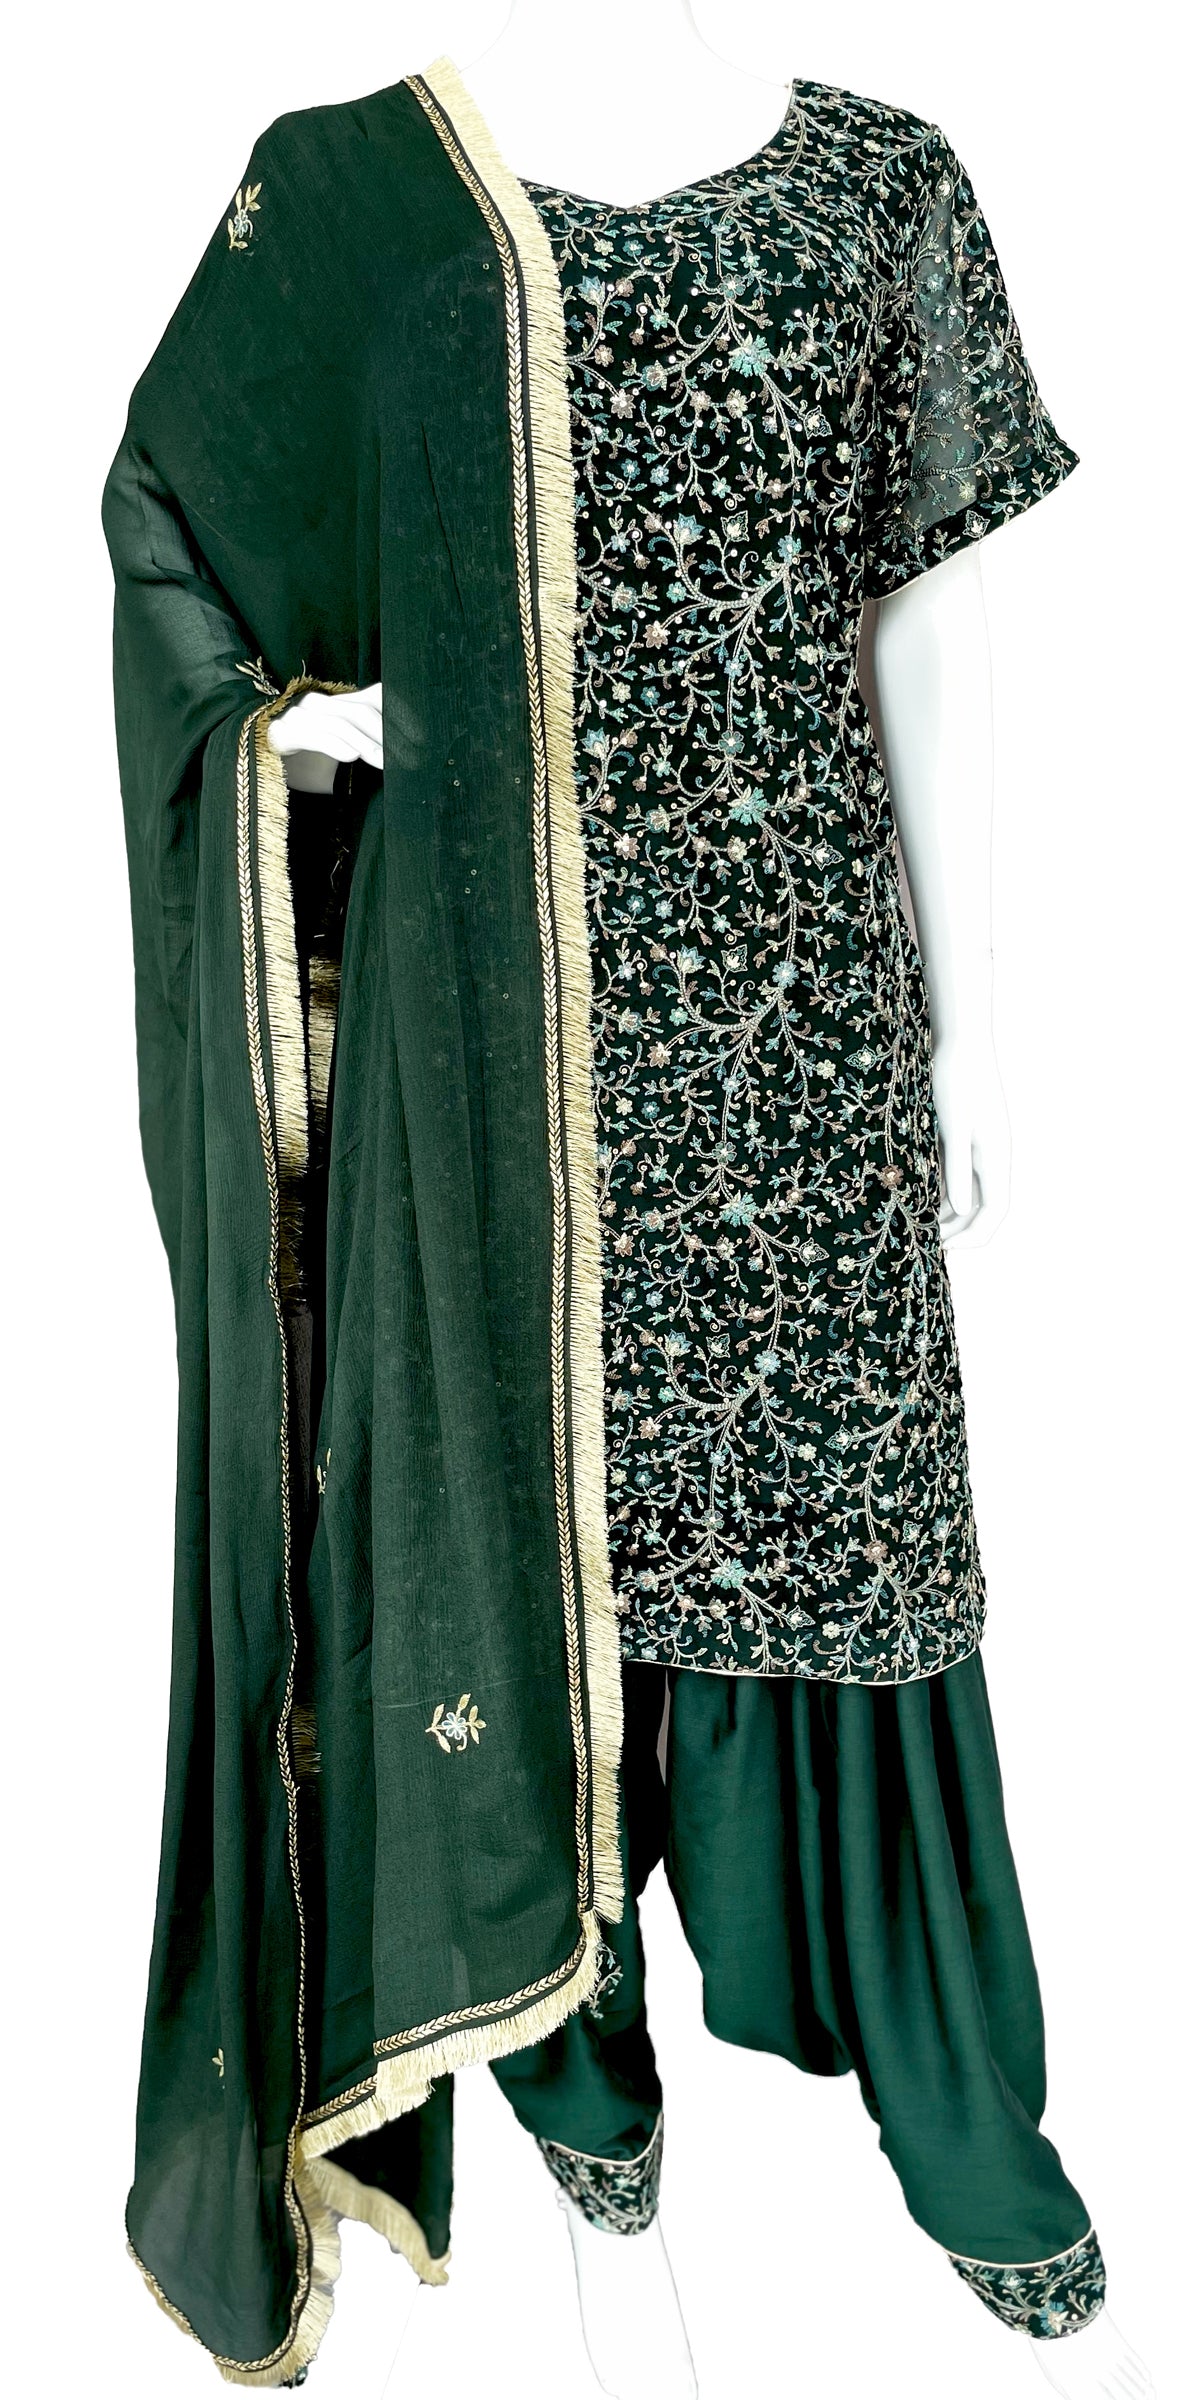 Bottle Green Patiala salwar Muslin suit, Kashmiri Embroidered Kurta, Wedding wear, Mehendi Wear Suit, Gift for her, Punjabi Suit, Handmade